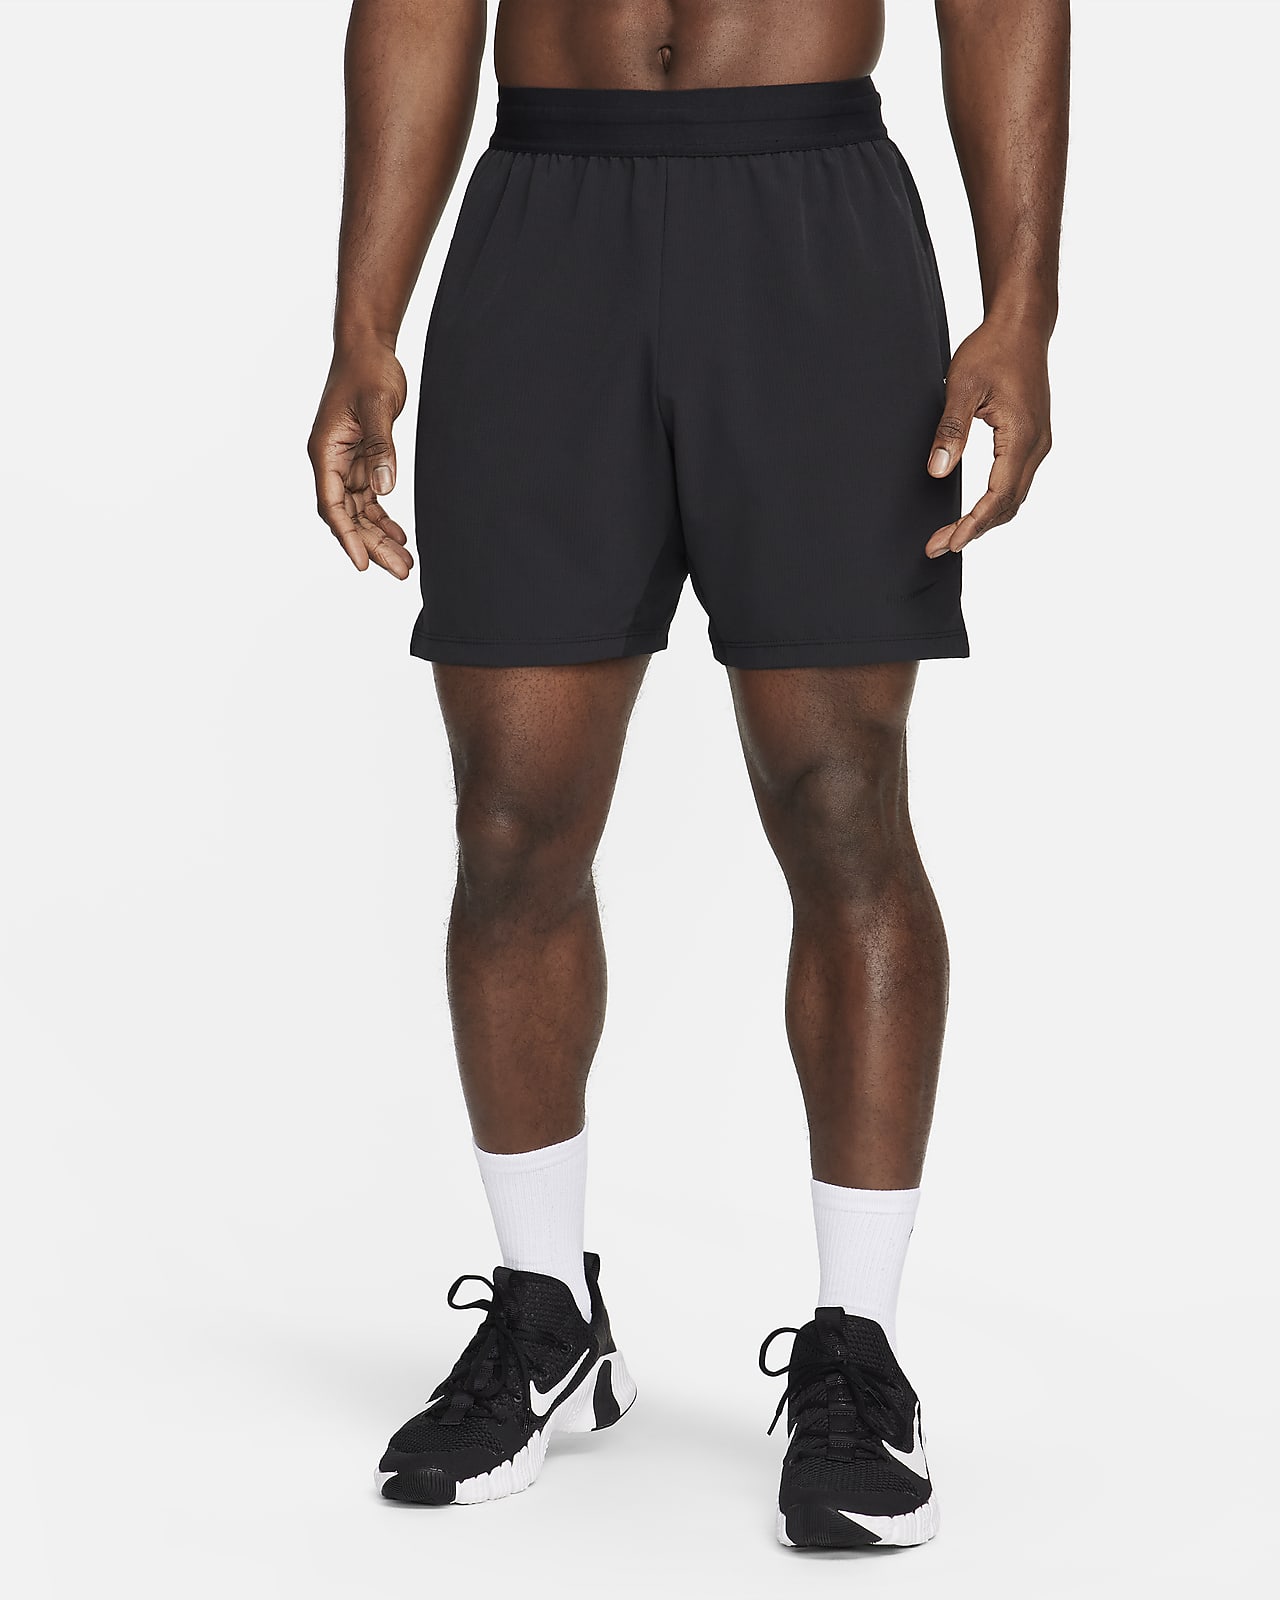 Nike Flex Rep 4.0 Pantalons curts de fitnes sense folre Dri-FIT de 18 cm - Home